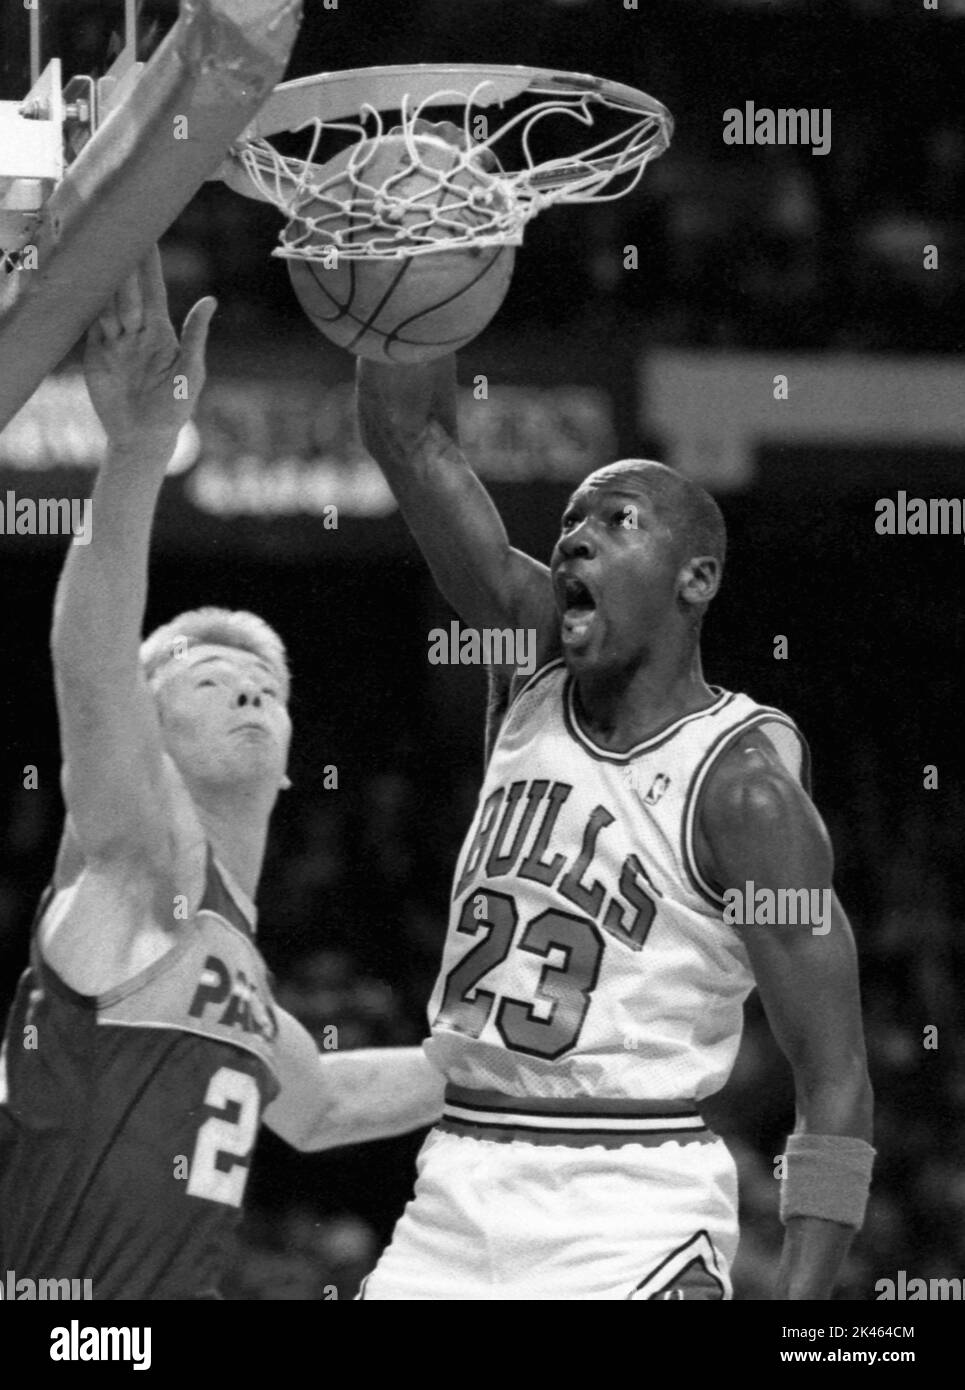 Basketball michael jordan 1990 Black and White Stock Photos & Images ...